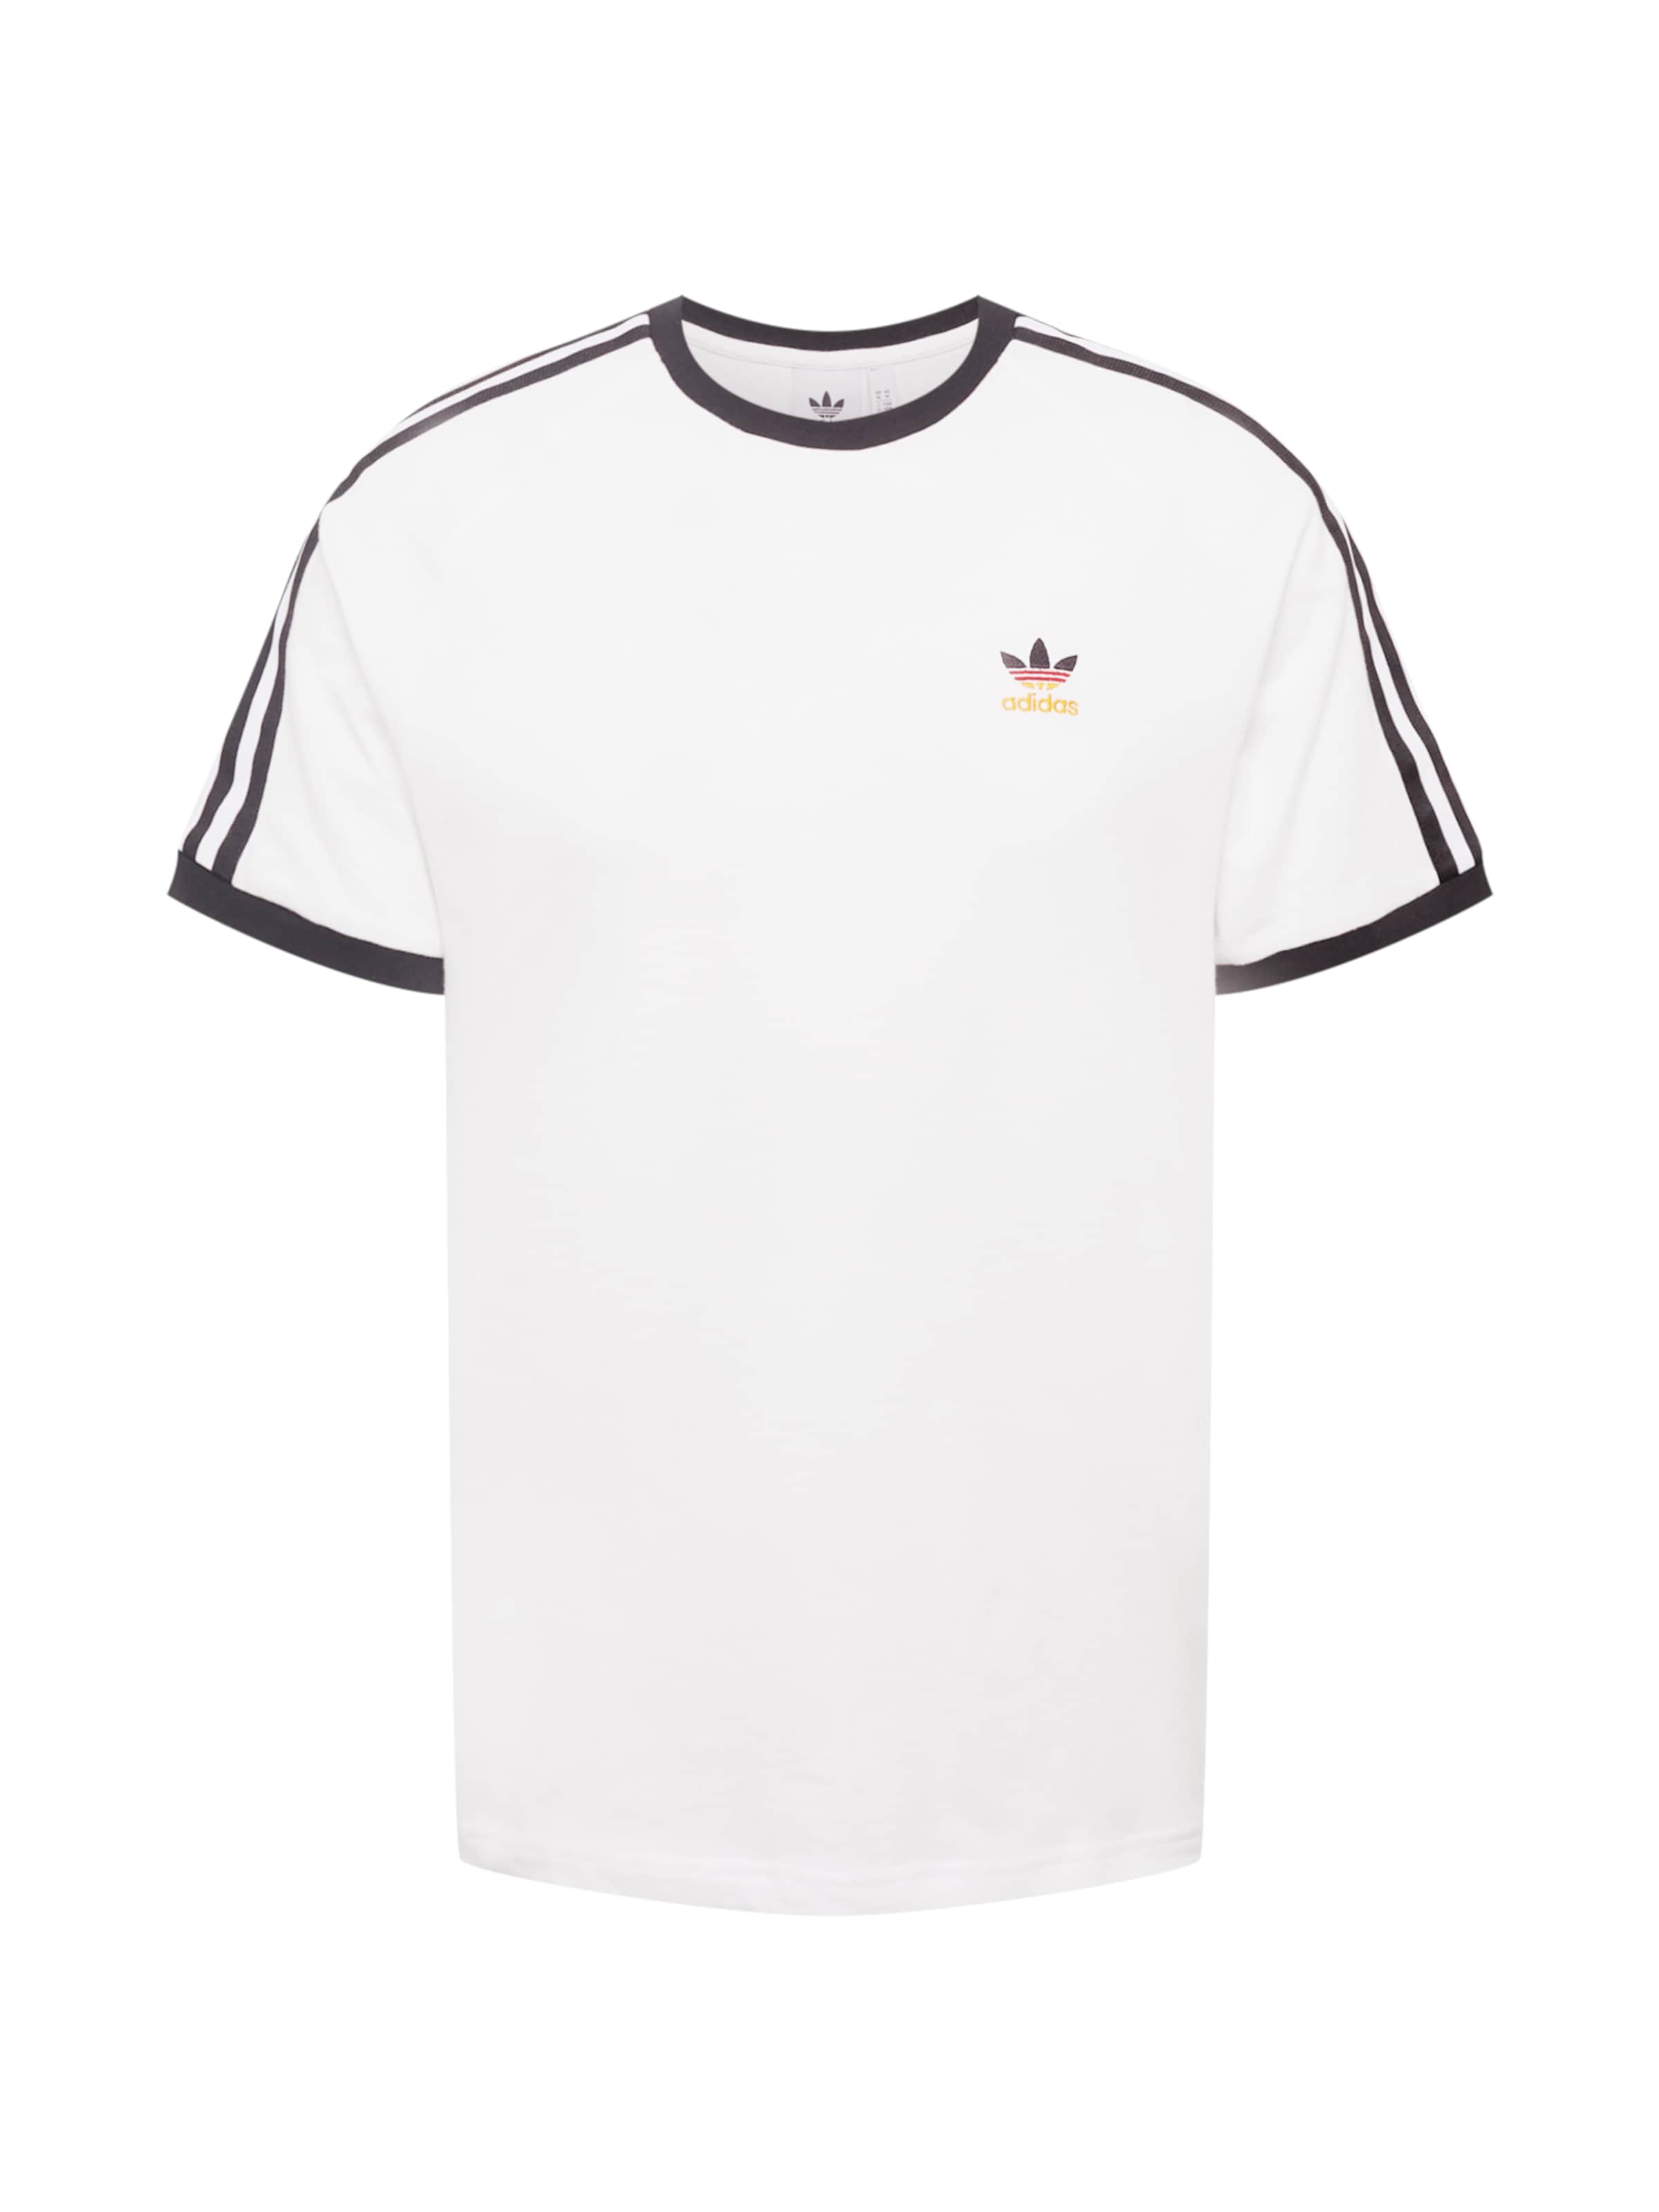 Adidas T-shirt MEN FASHION Shirts & T-shirts Sports discount 77% Red/White XL 